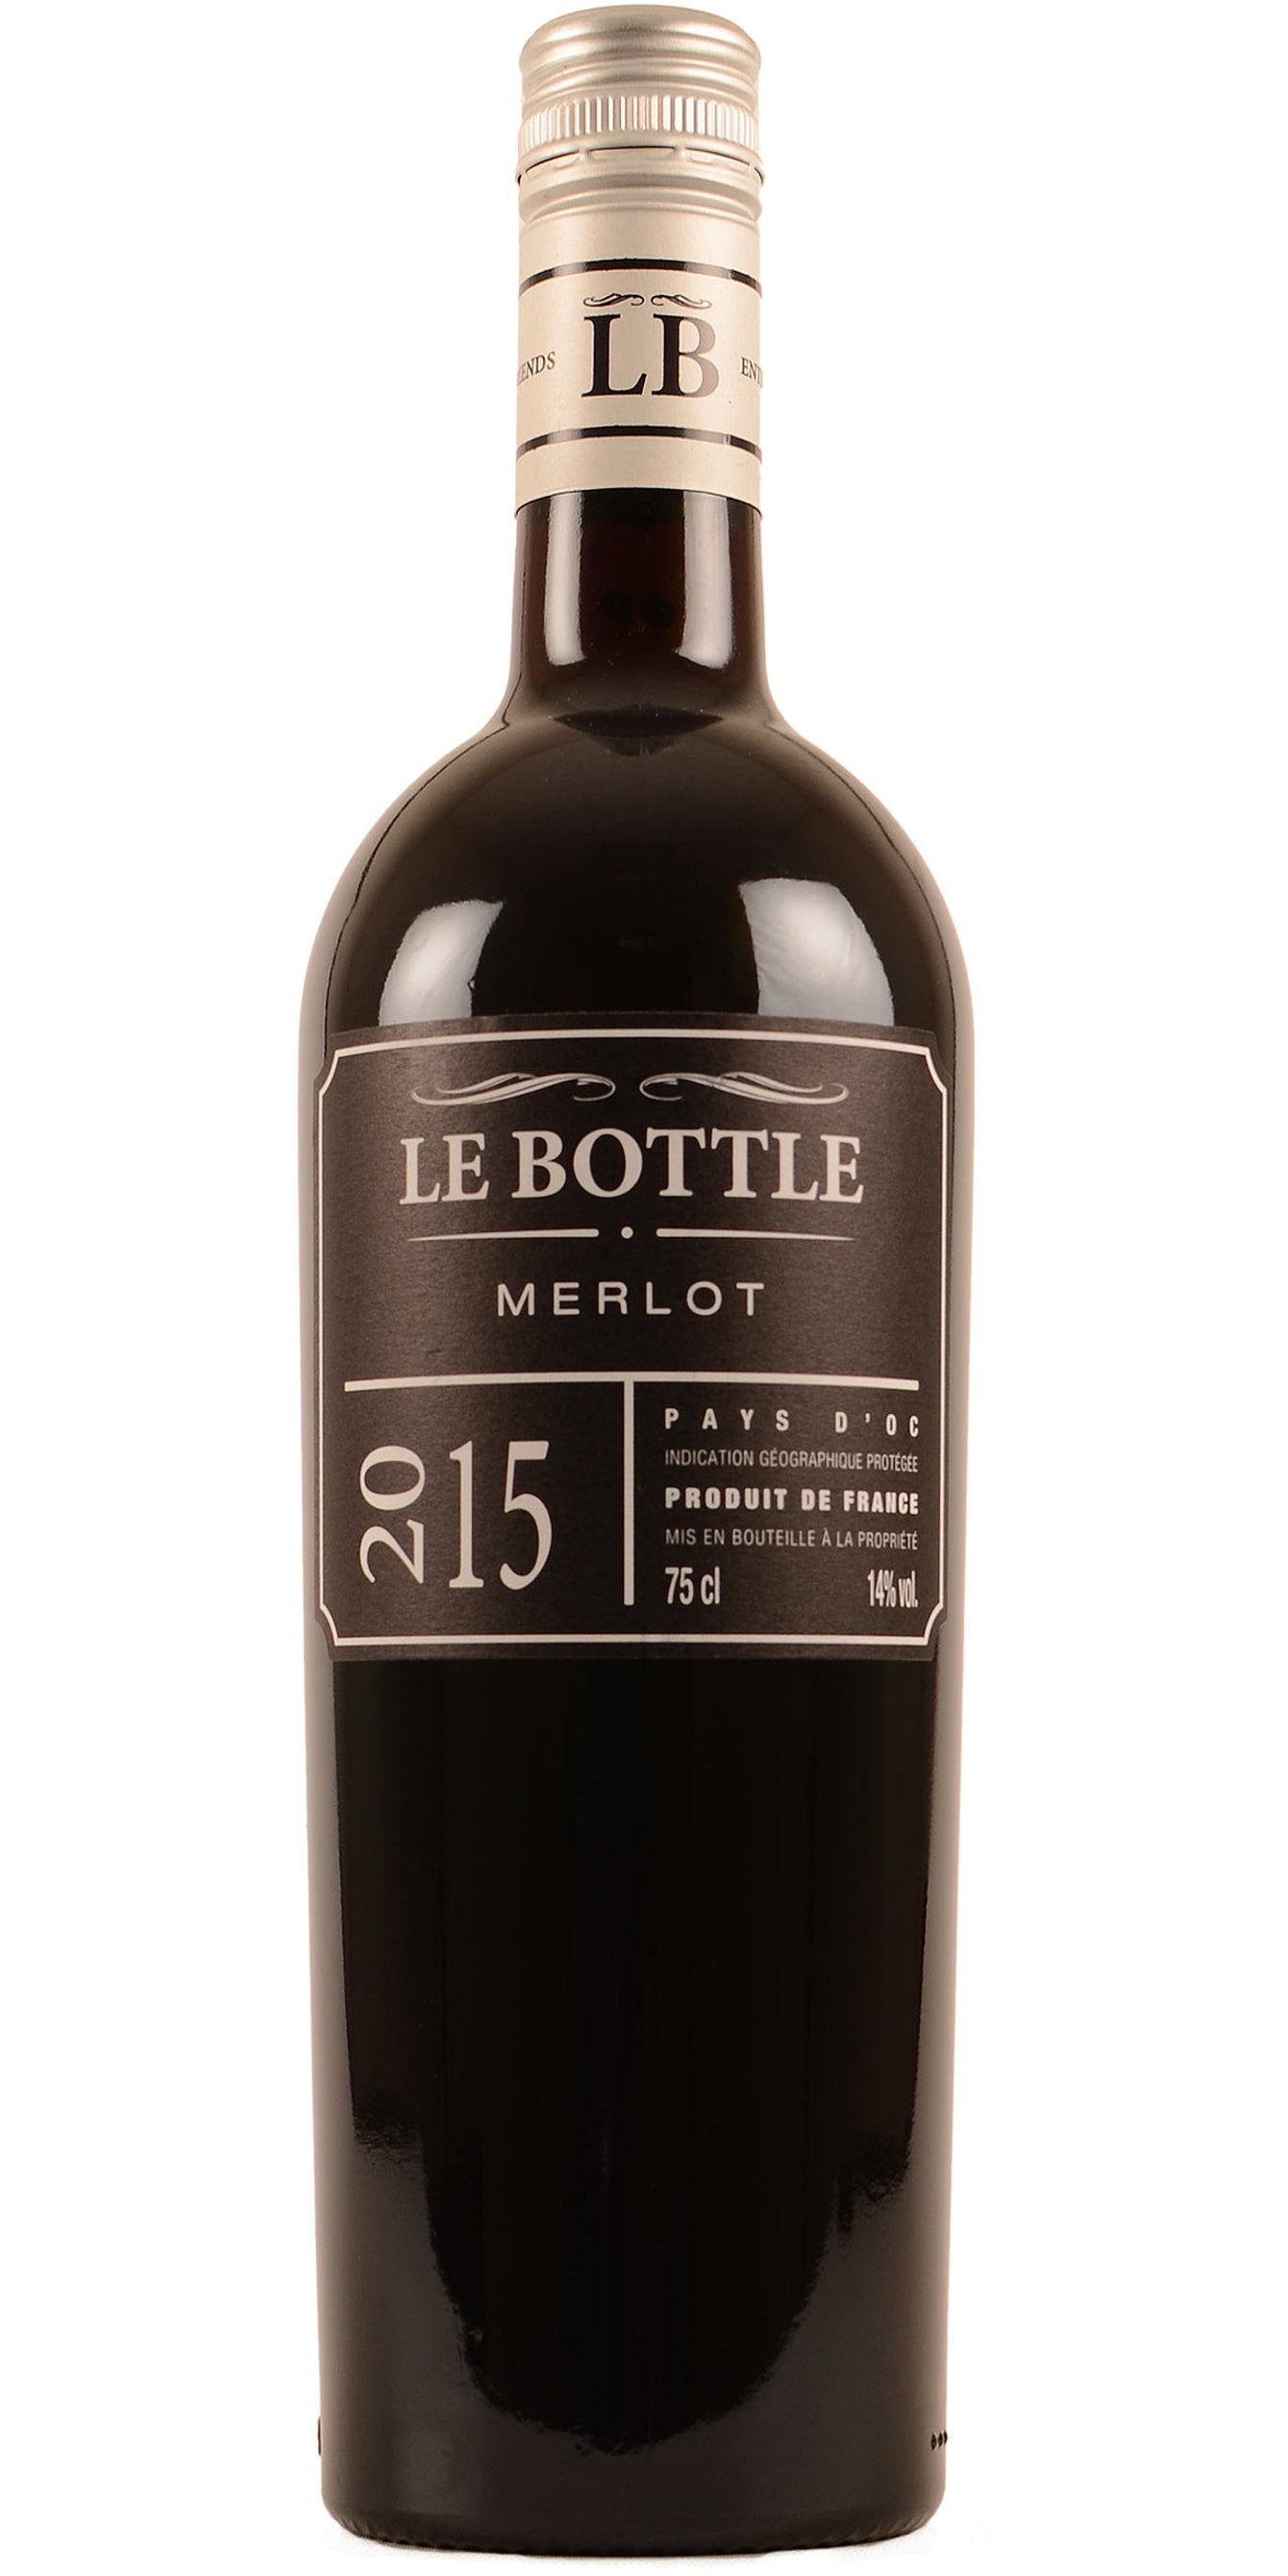 Le Bottle Merlot